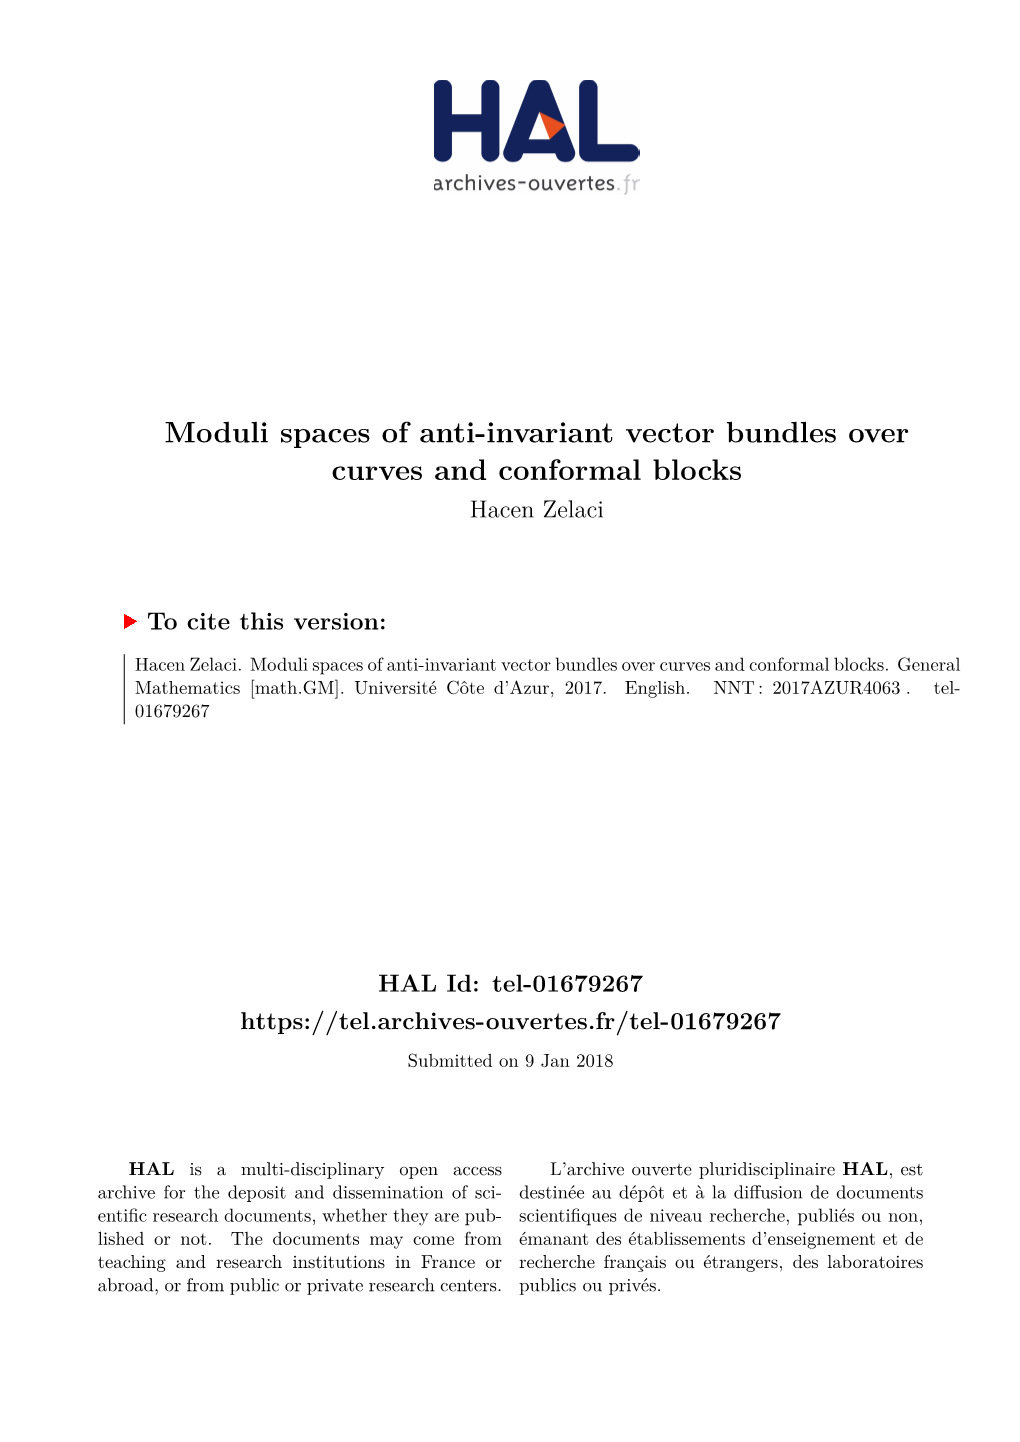 Moduli Spaces of Anti-Invariant Vector Bundles Over Curves and Conformal Blocks Hacen Zelaci